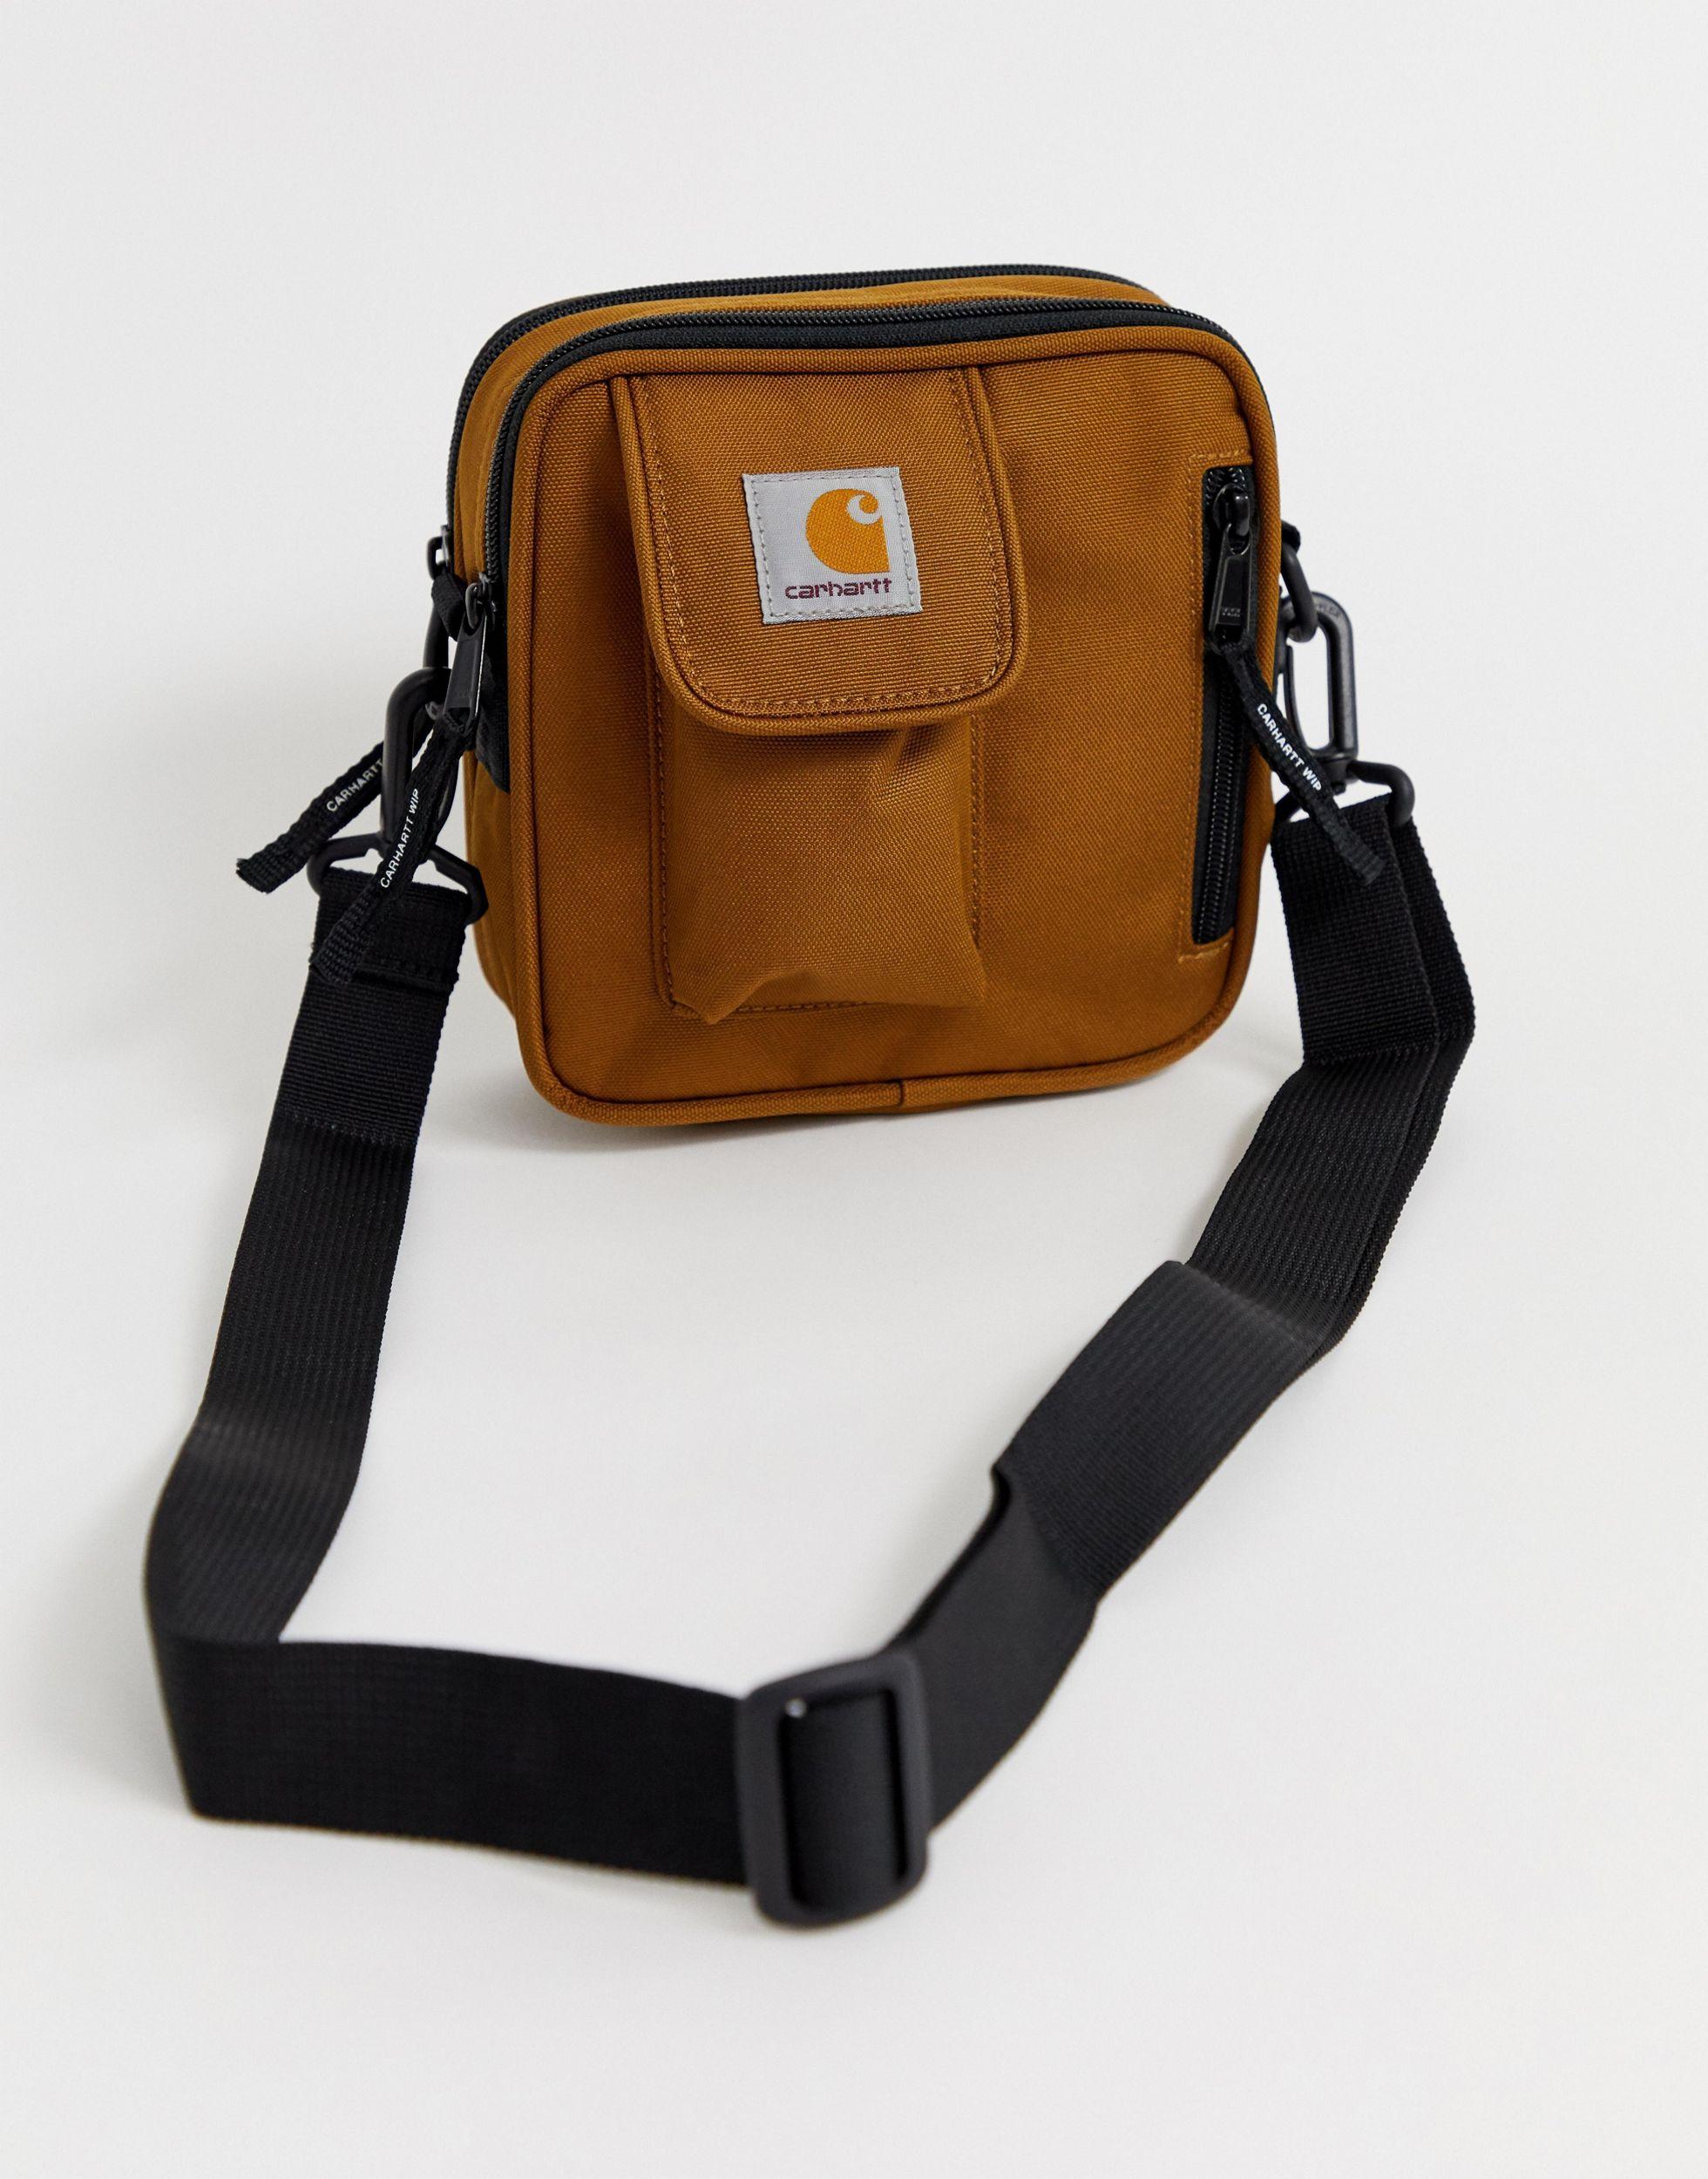 Carhartt сумка через плечо. Carhartt WIP сумка. Сумка Carhartt WIP Essentials. Сумка Carhartt WIP Essentials Bag. Carhartt WIP сумка через плечо.